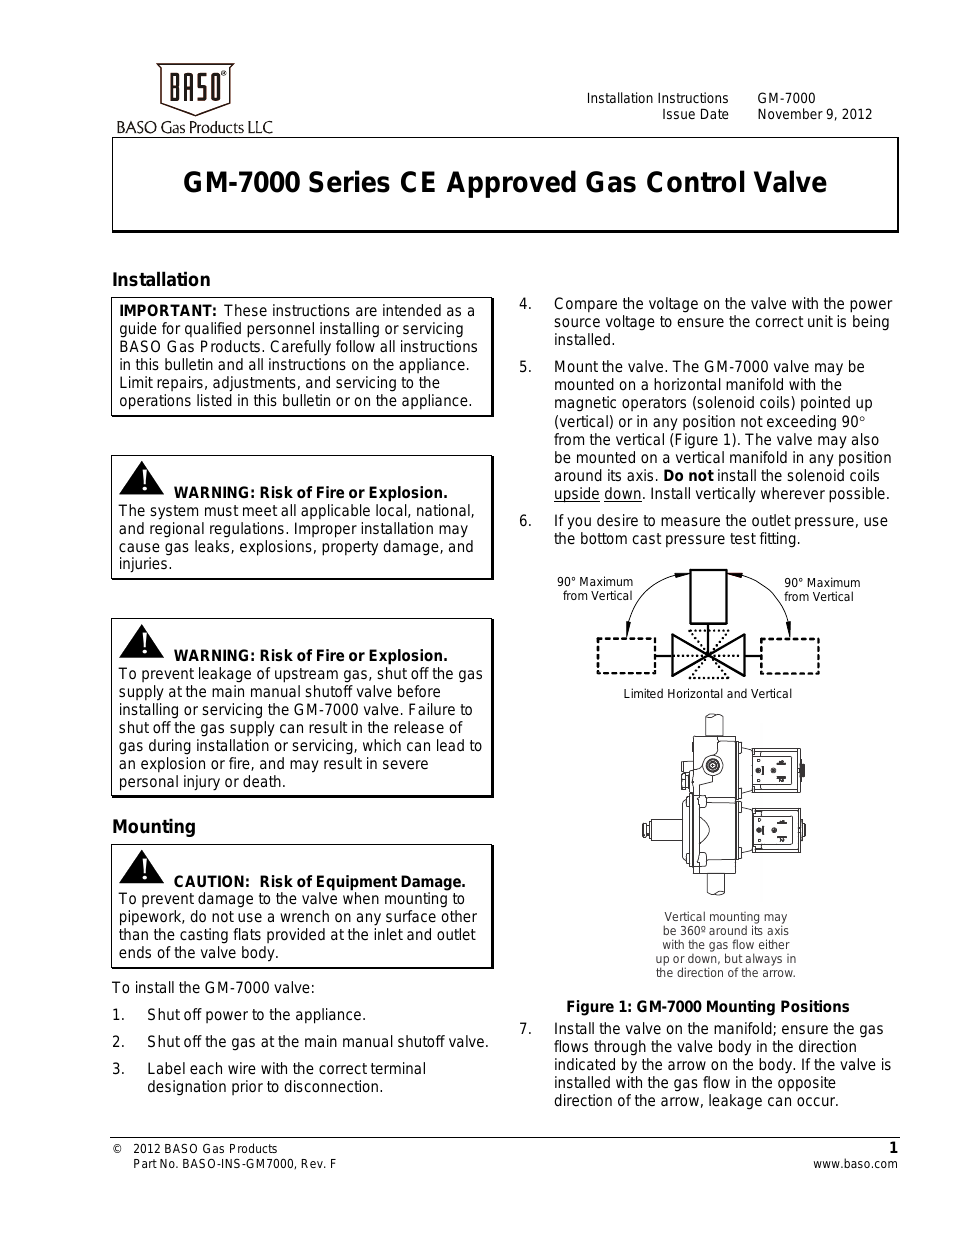 GM7000 Series Multi-function Gas Control Valve